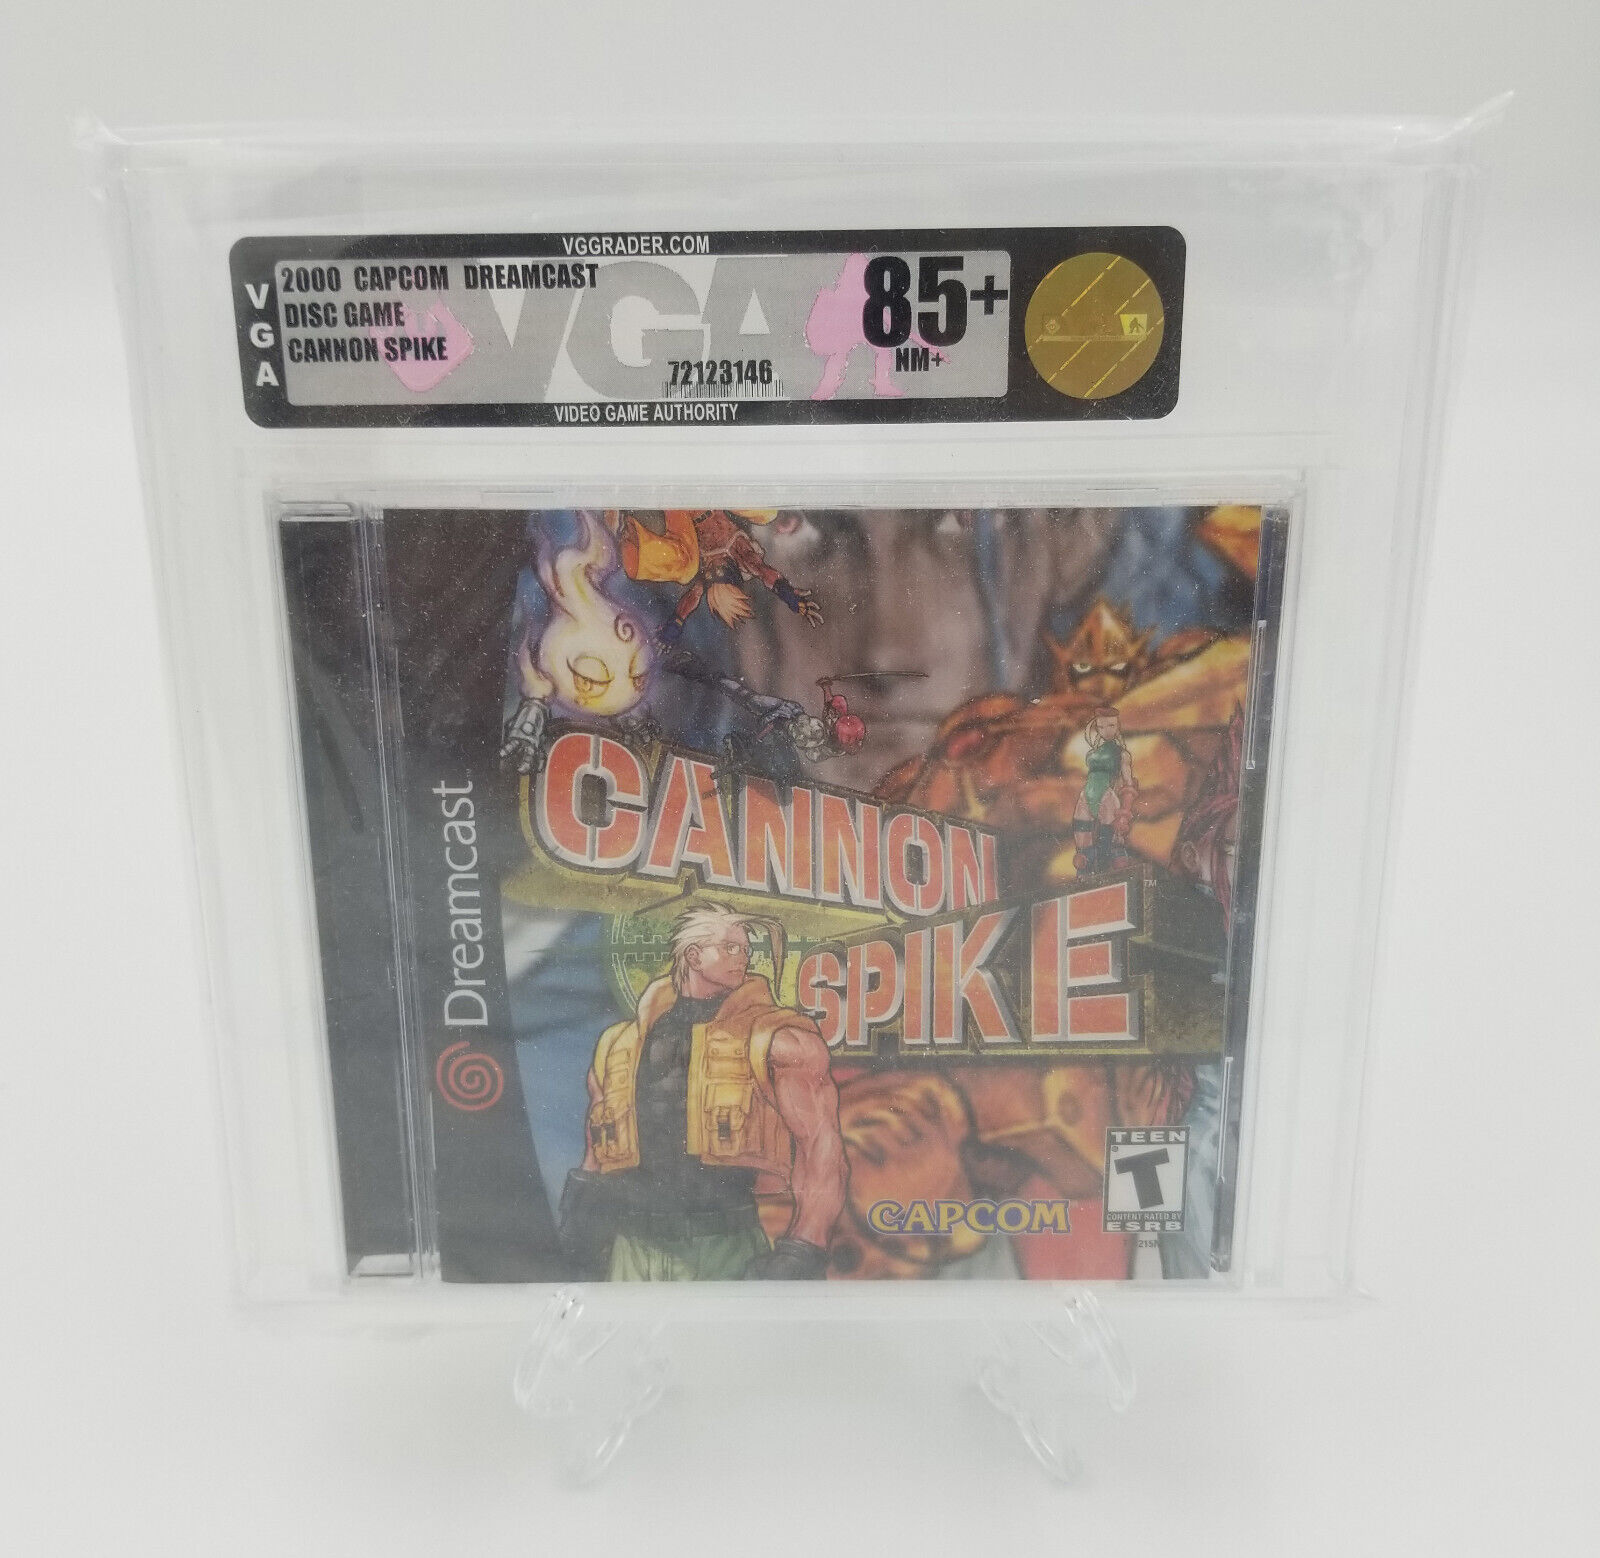 Sealed Sega Dreamcast Cannon Spike (Capcom Cammy Mega Man) VGA 85+ (Not Wata)